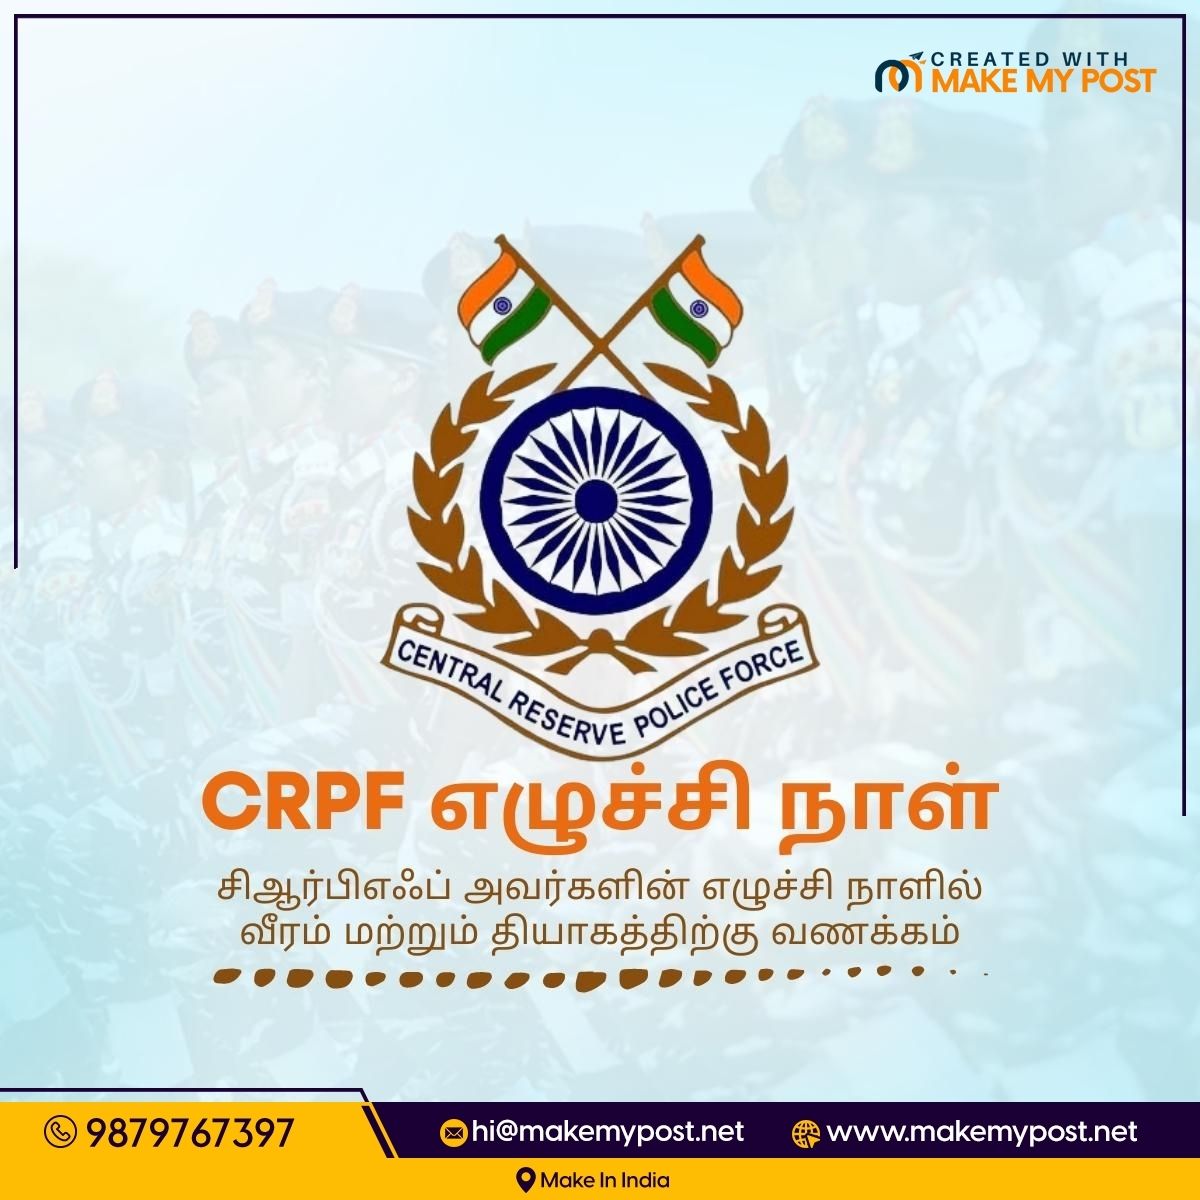 CRPF Recruitment 2021: Apply for Teacher posts on crpf.gov.in, details here  - Hindustan Times